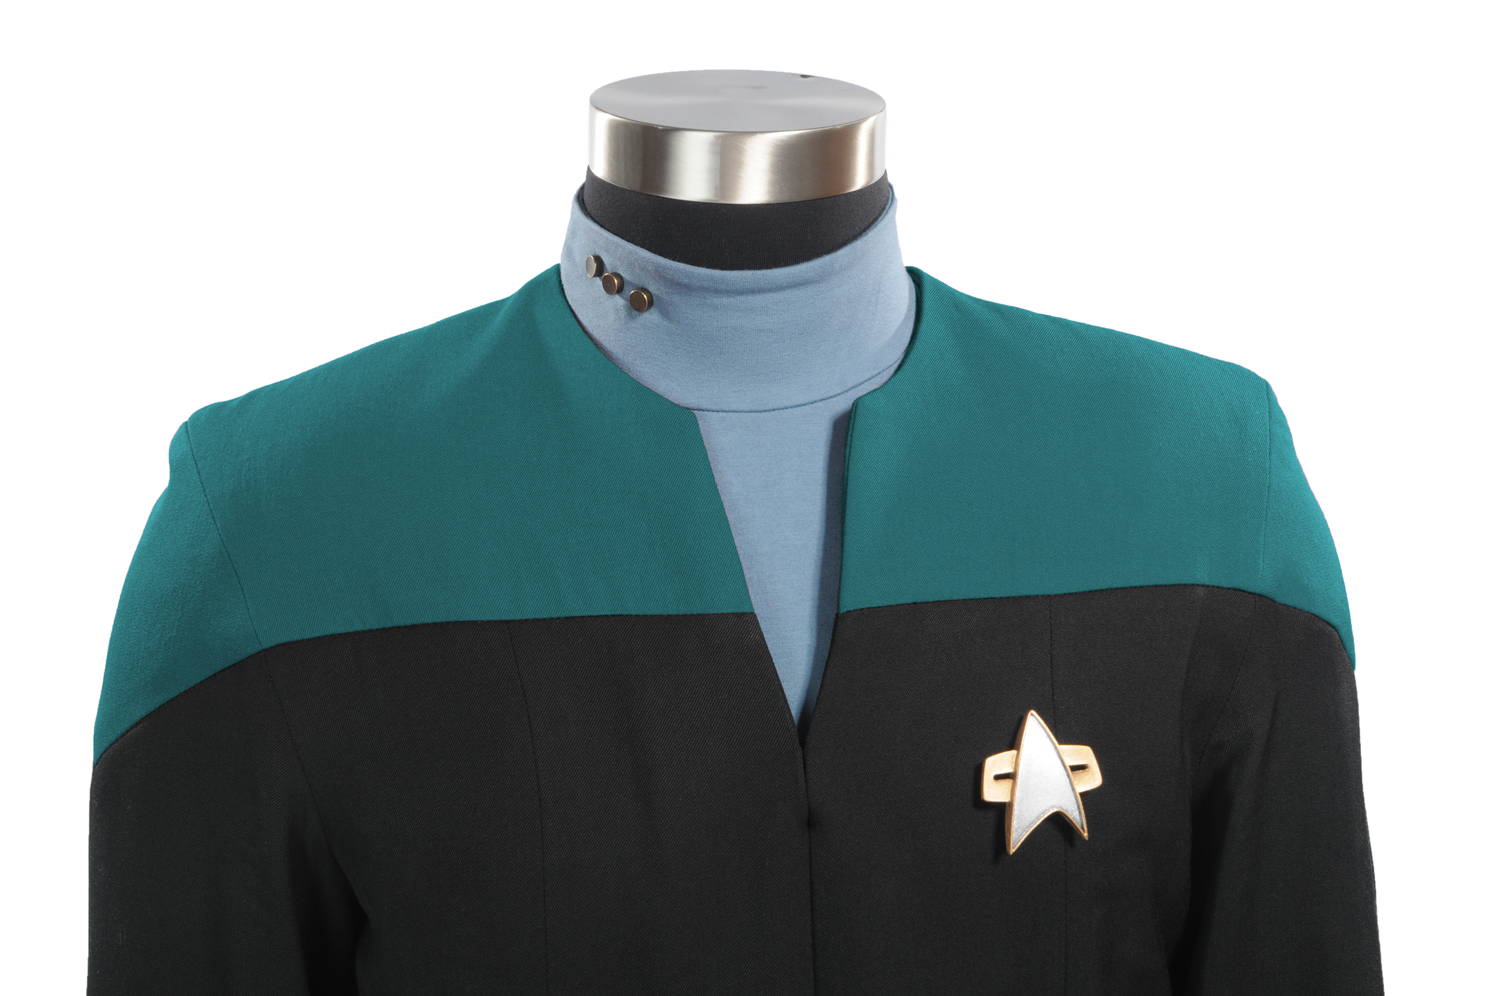 Star Trek Voyager Uniform 59